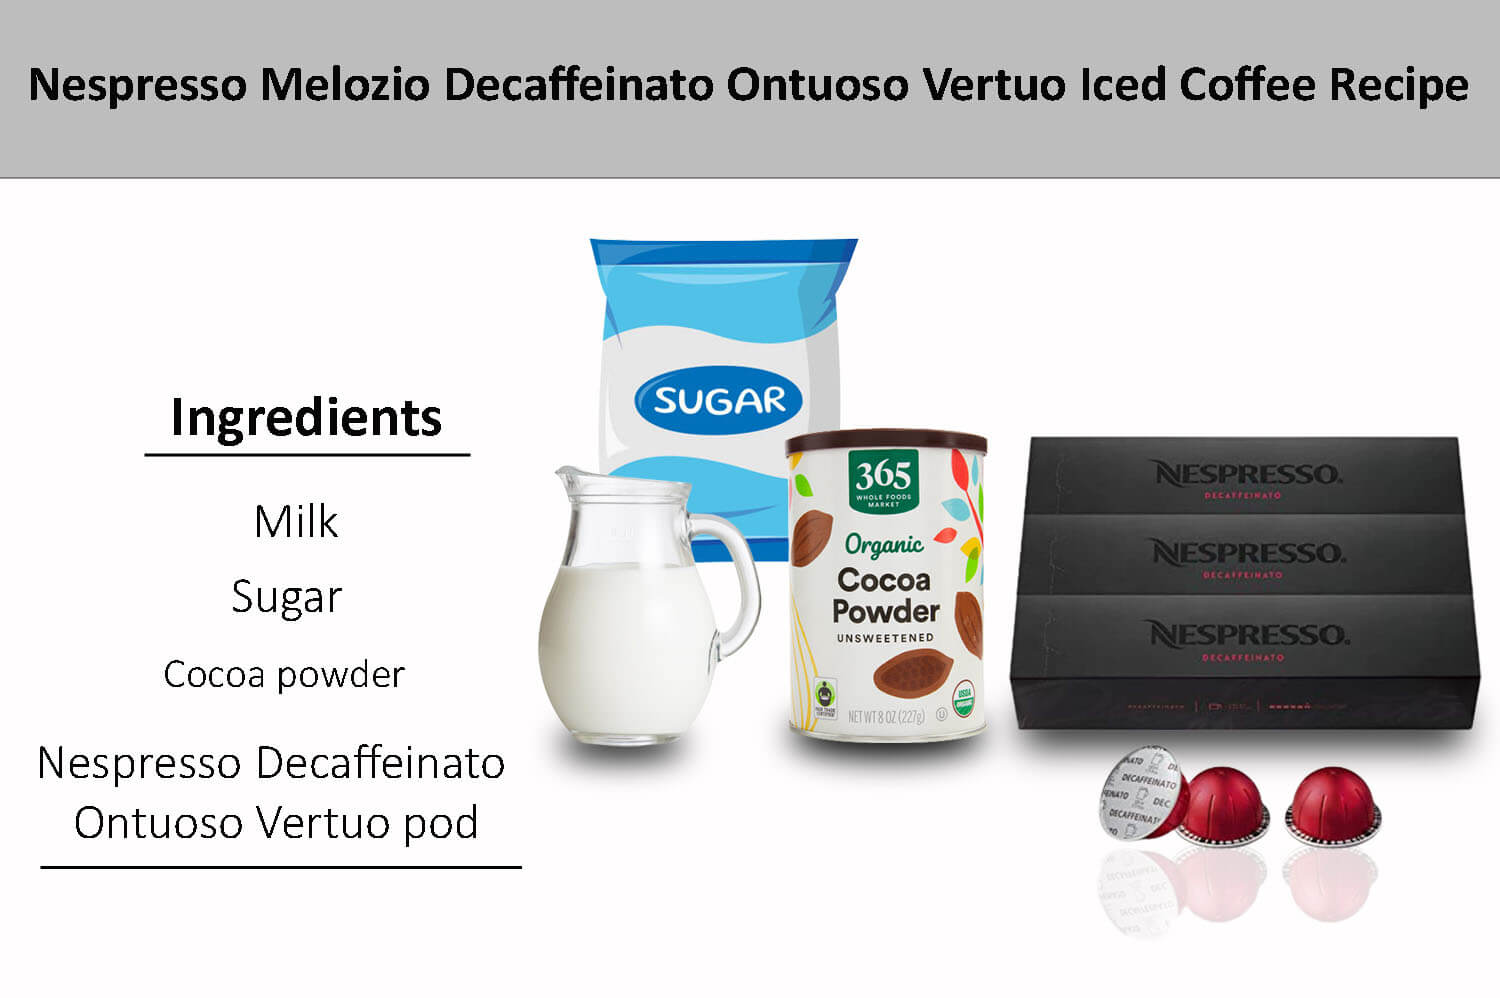 In this image i explain ingredients nespresso decaffeinato ontuoso Mocha Recipe